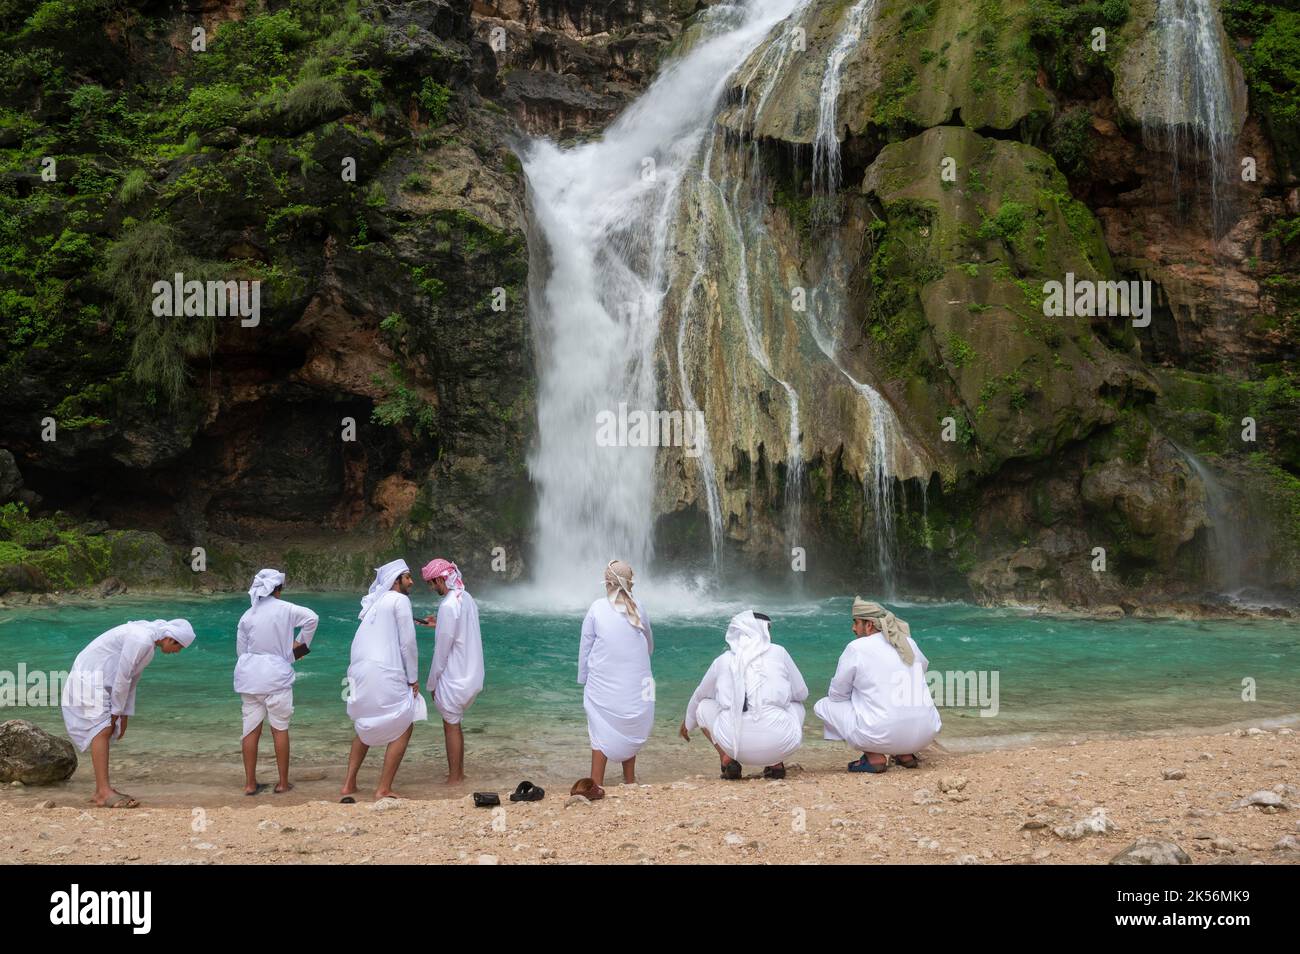 Ayn Khor during the autumn rainy season or khareef. Waterfall and natural pool close to Salalah, Oman Stock Photo